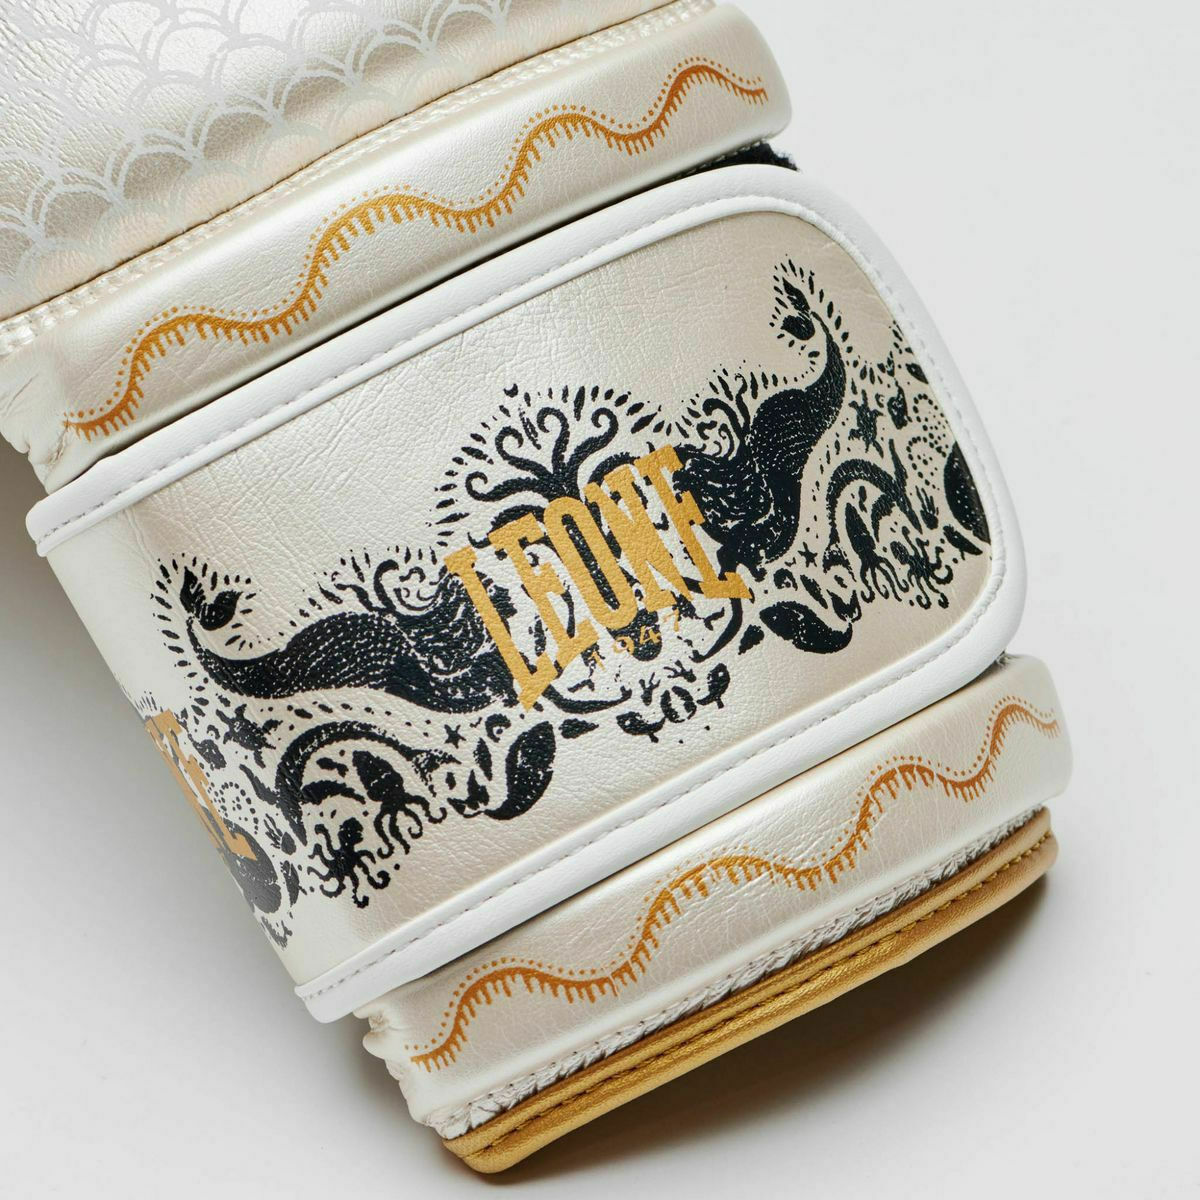 Leone 1947 PU Boxing Gloves Parthenope - White